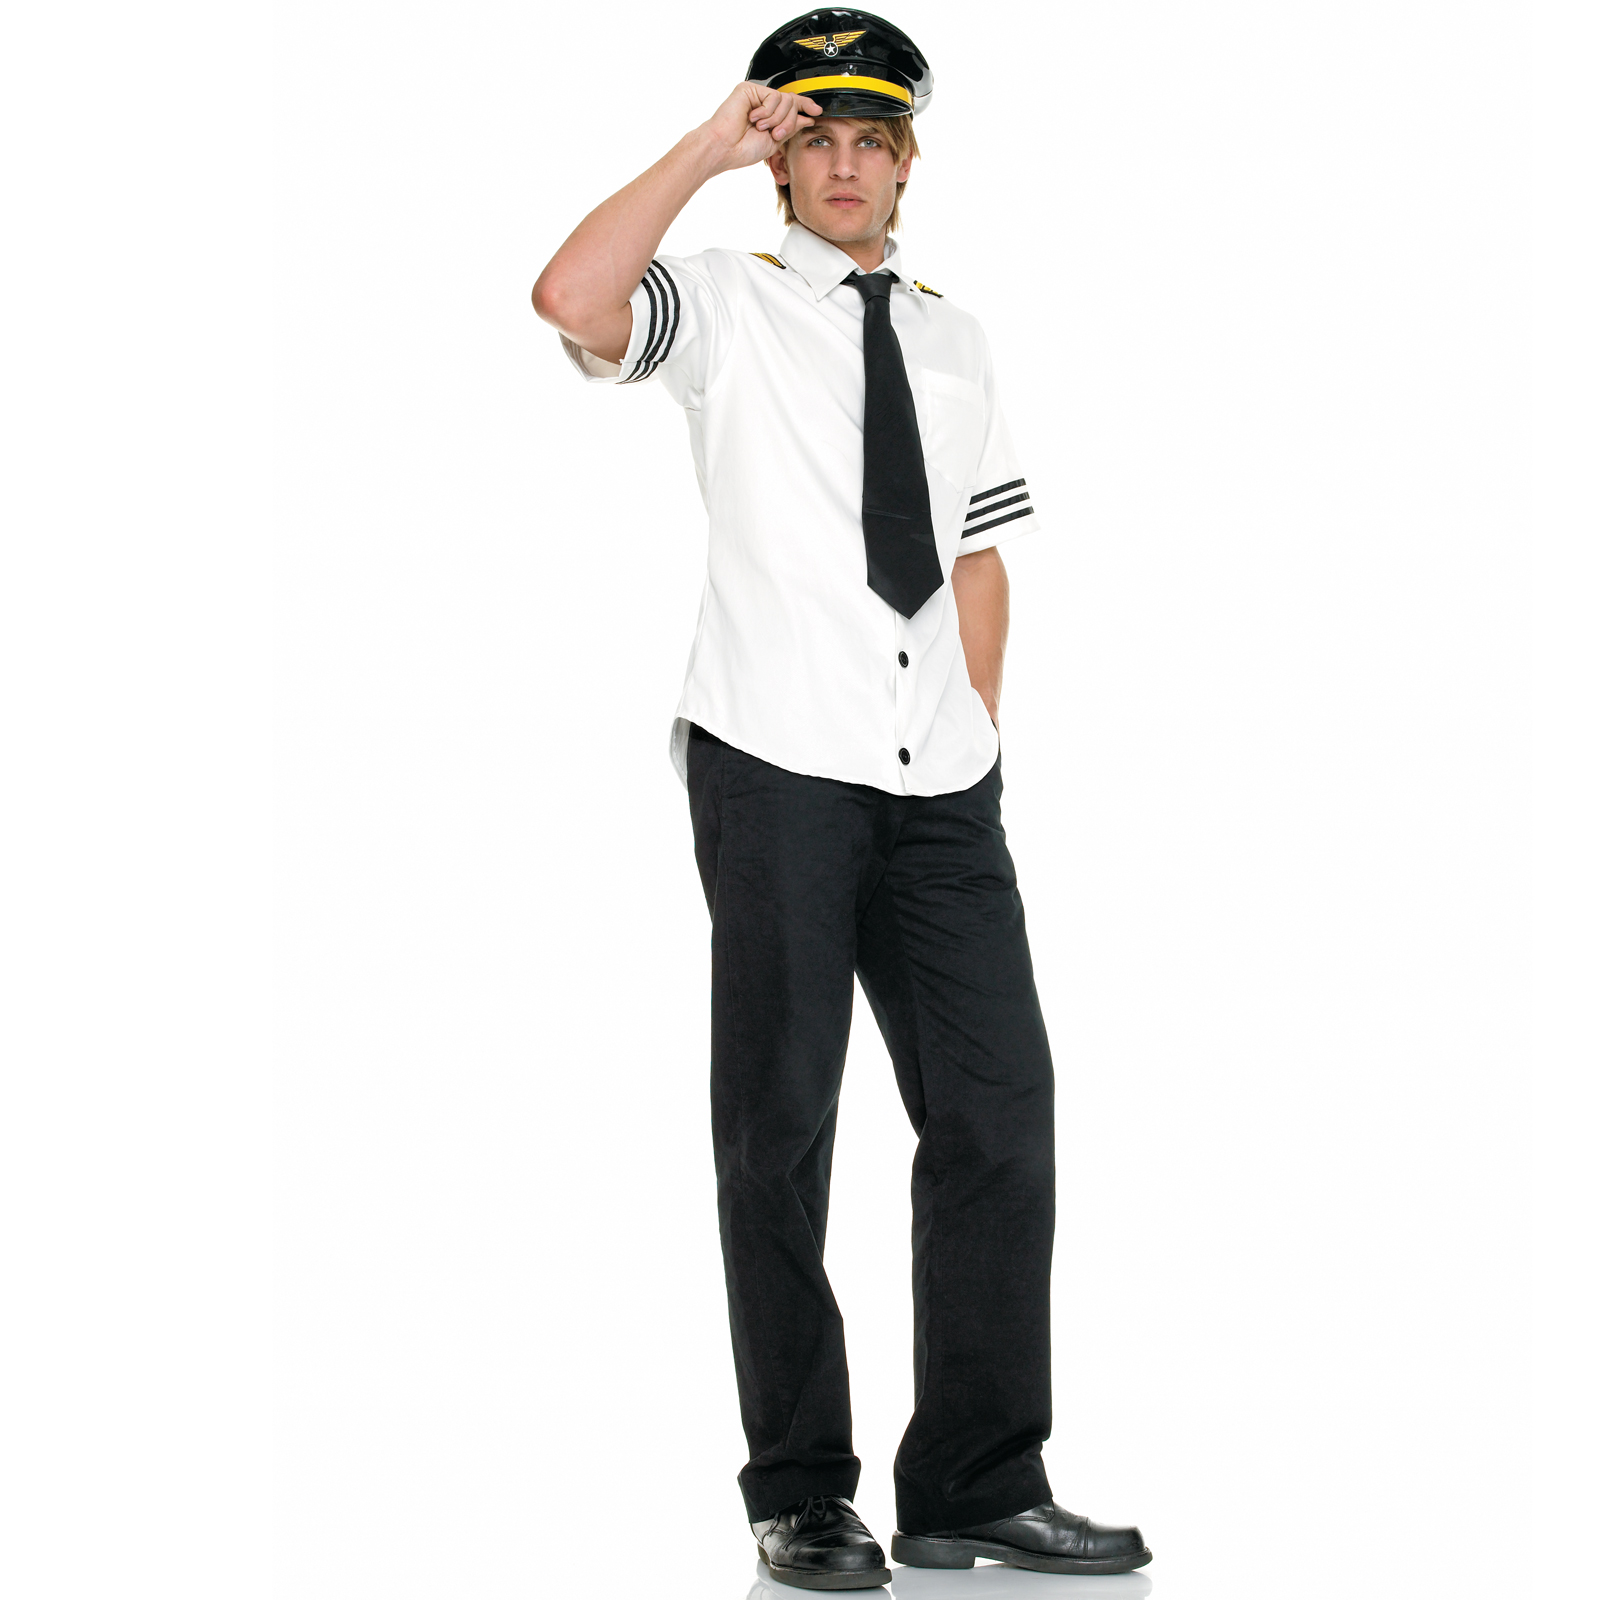 Leg Avenue Men's Airline Pilot Adult Costume Male - Medium/Large